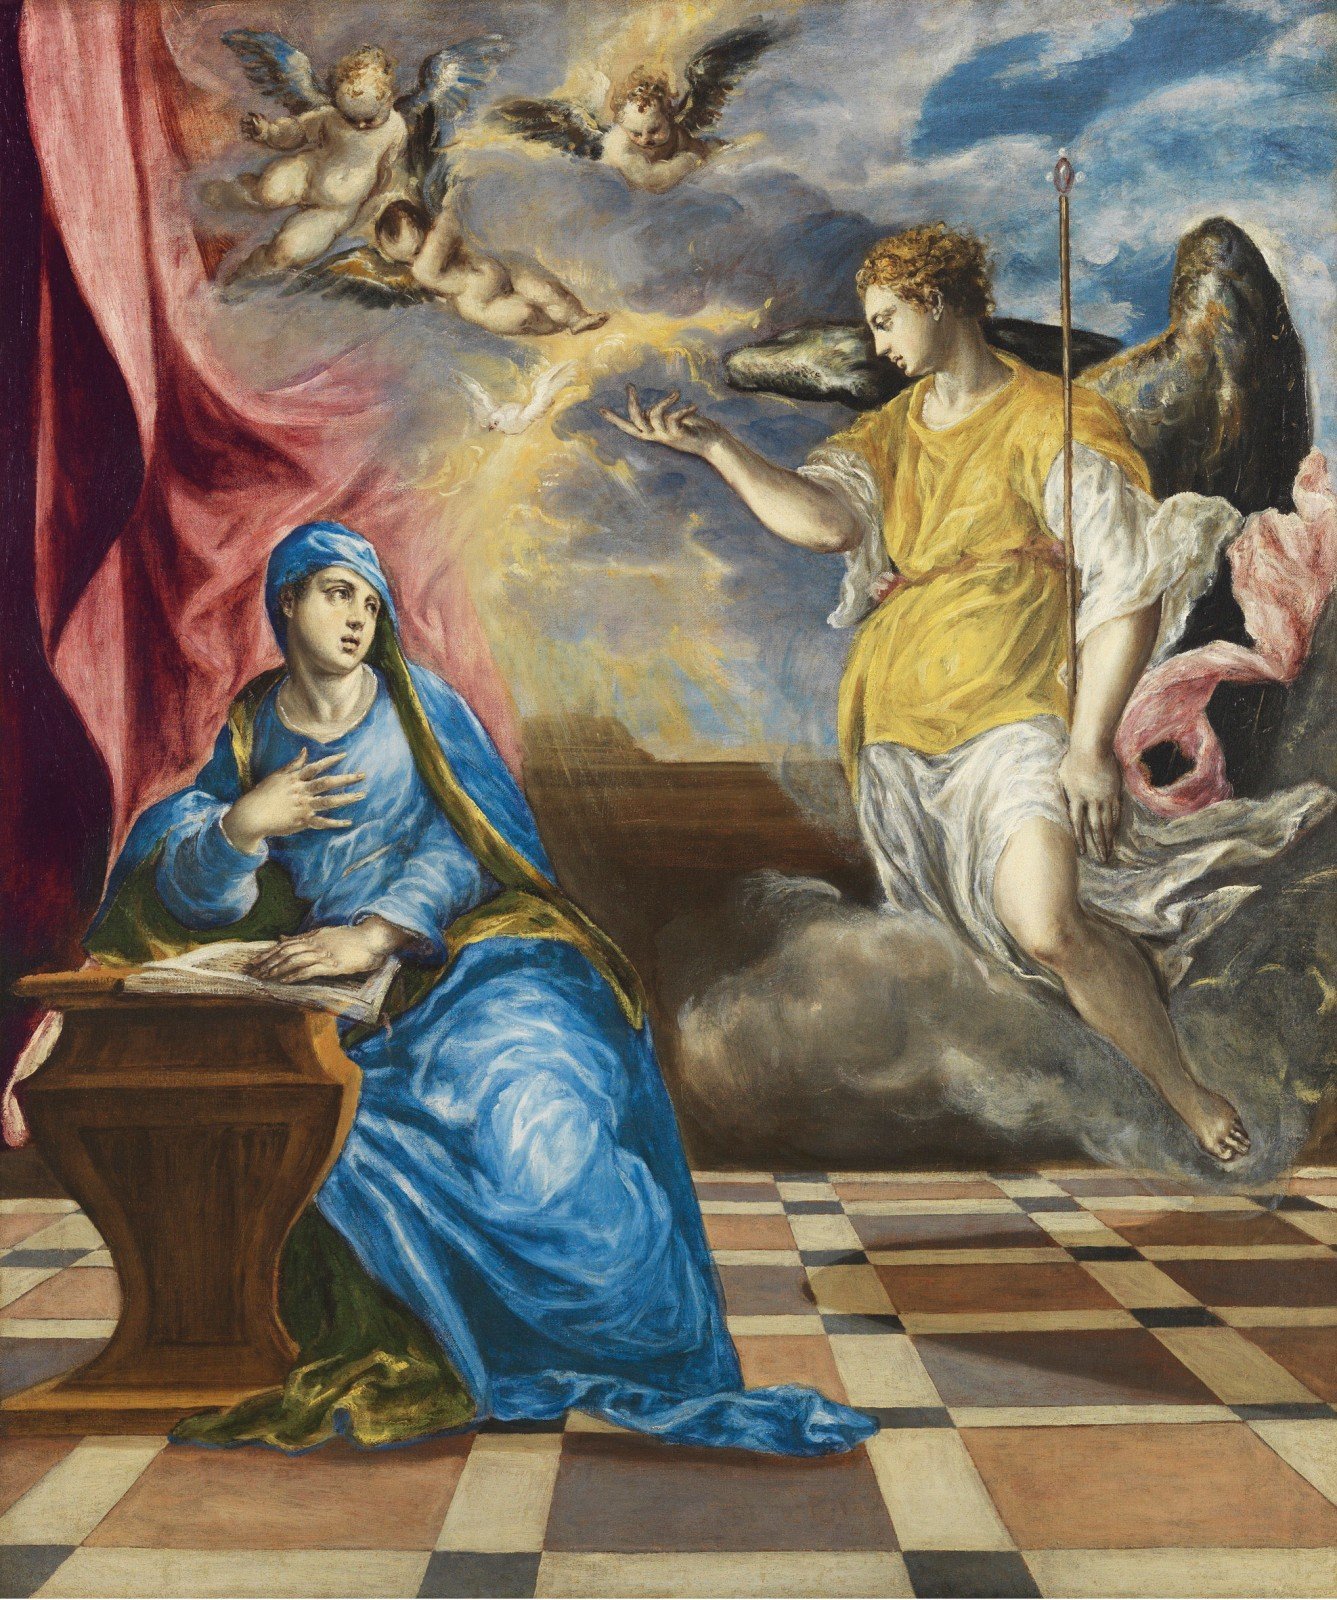 El Greco, “Annunciation”, 1576, Museo Thyssen-Bornemisza